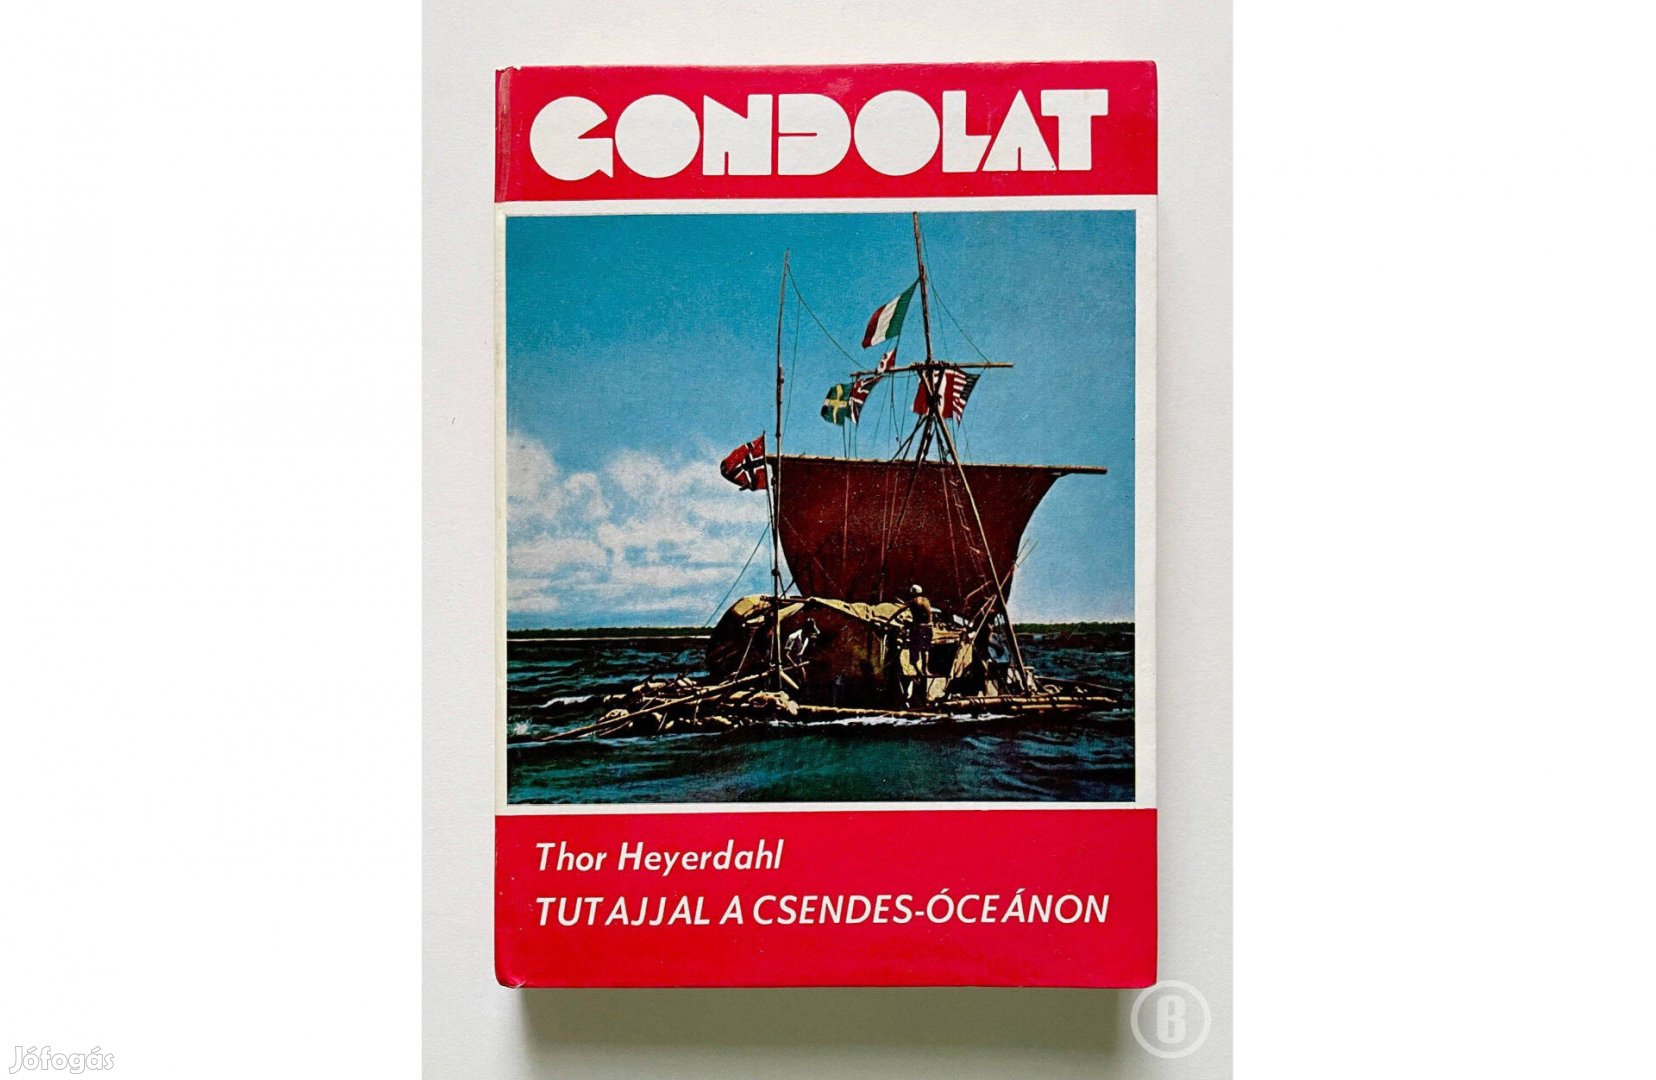 Thor Heyerdahl: Tutajjal a Csendes-óceánon (Kon-Tiki)